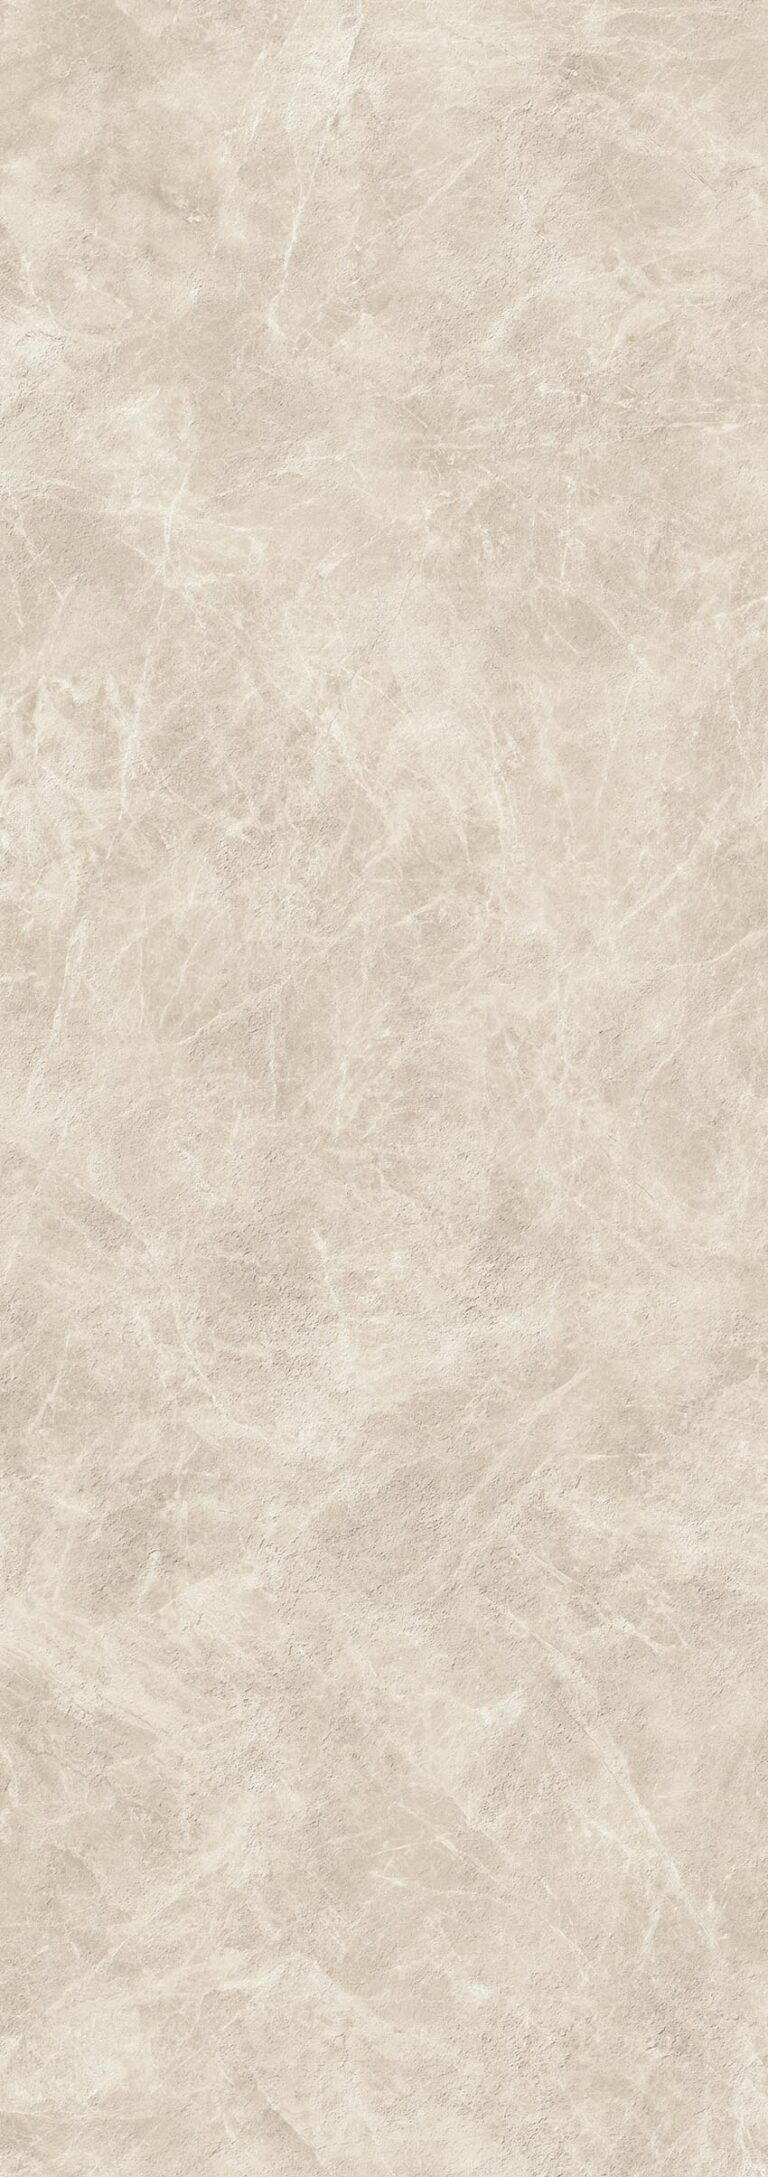 Ceramic countertop - AVORIO - LAMINAM - kitchen / beige / textured